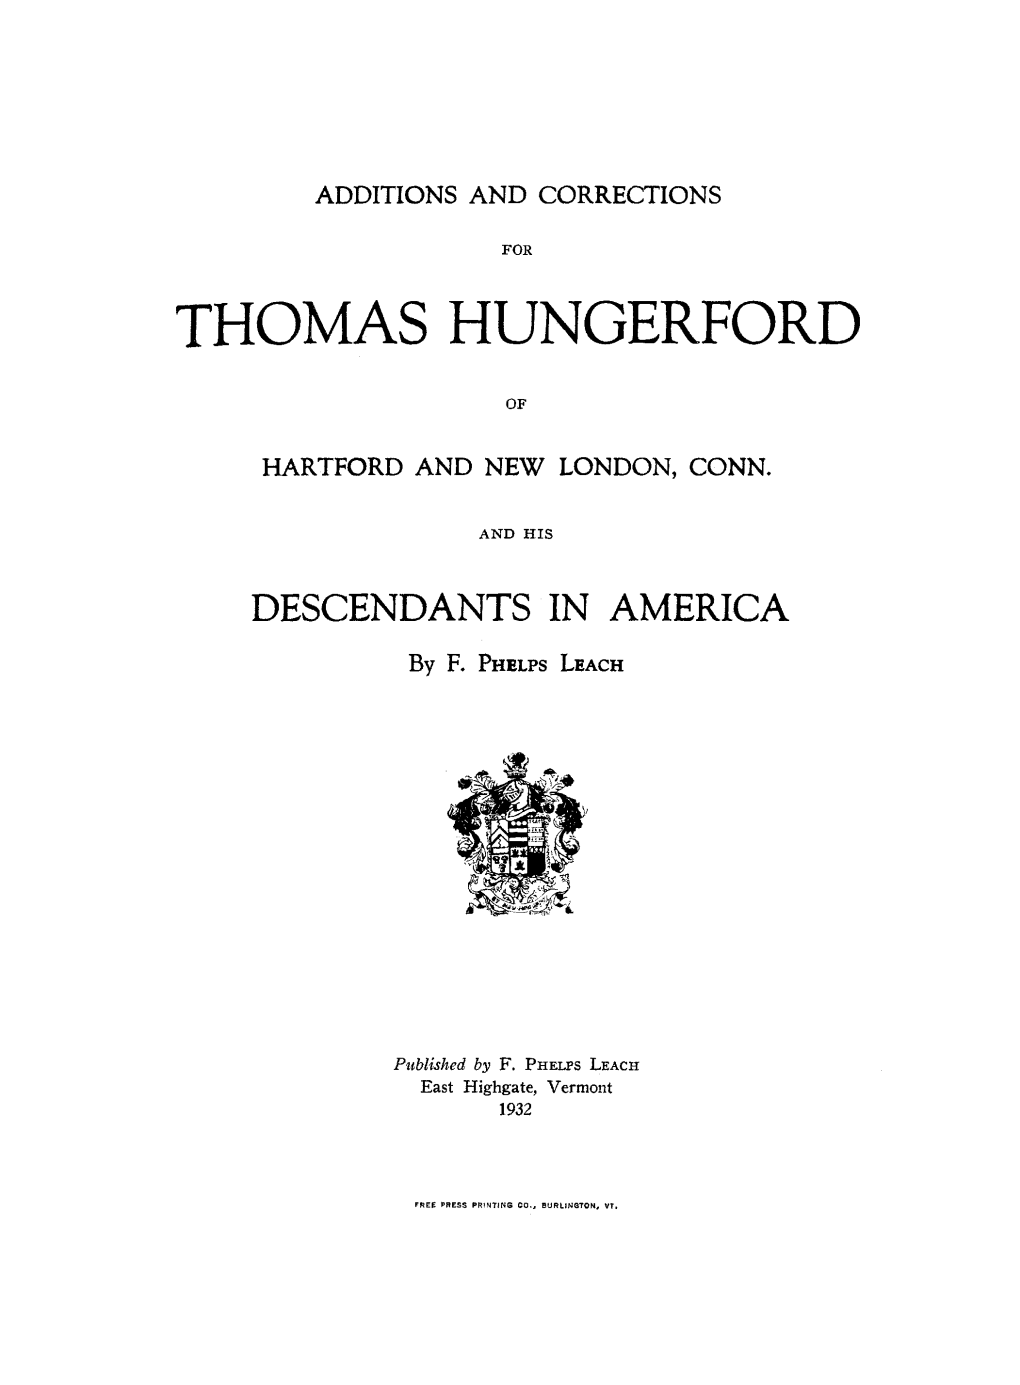 Thomas Hungerford